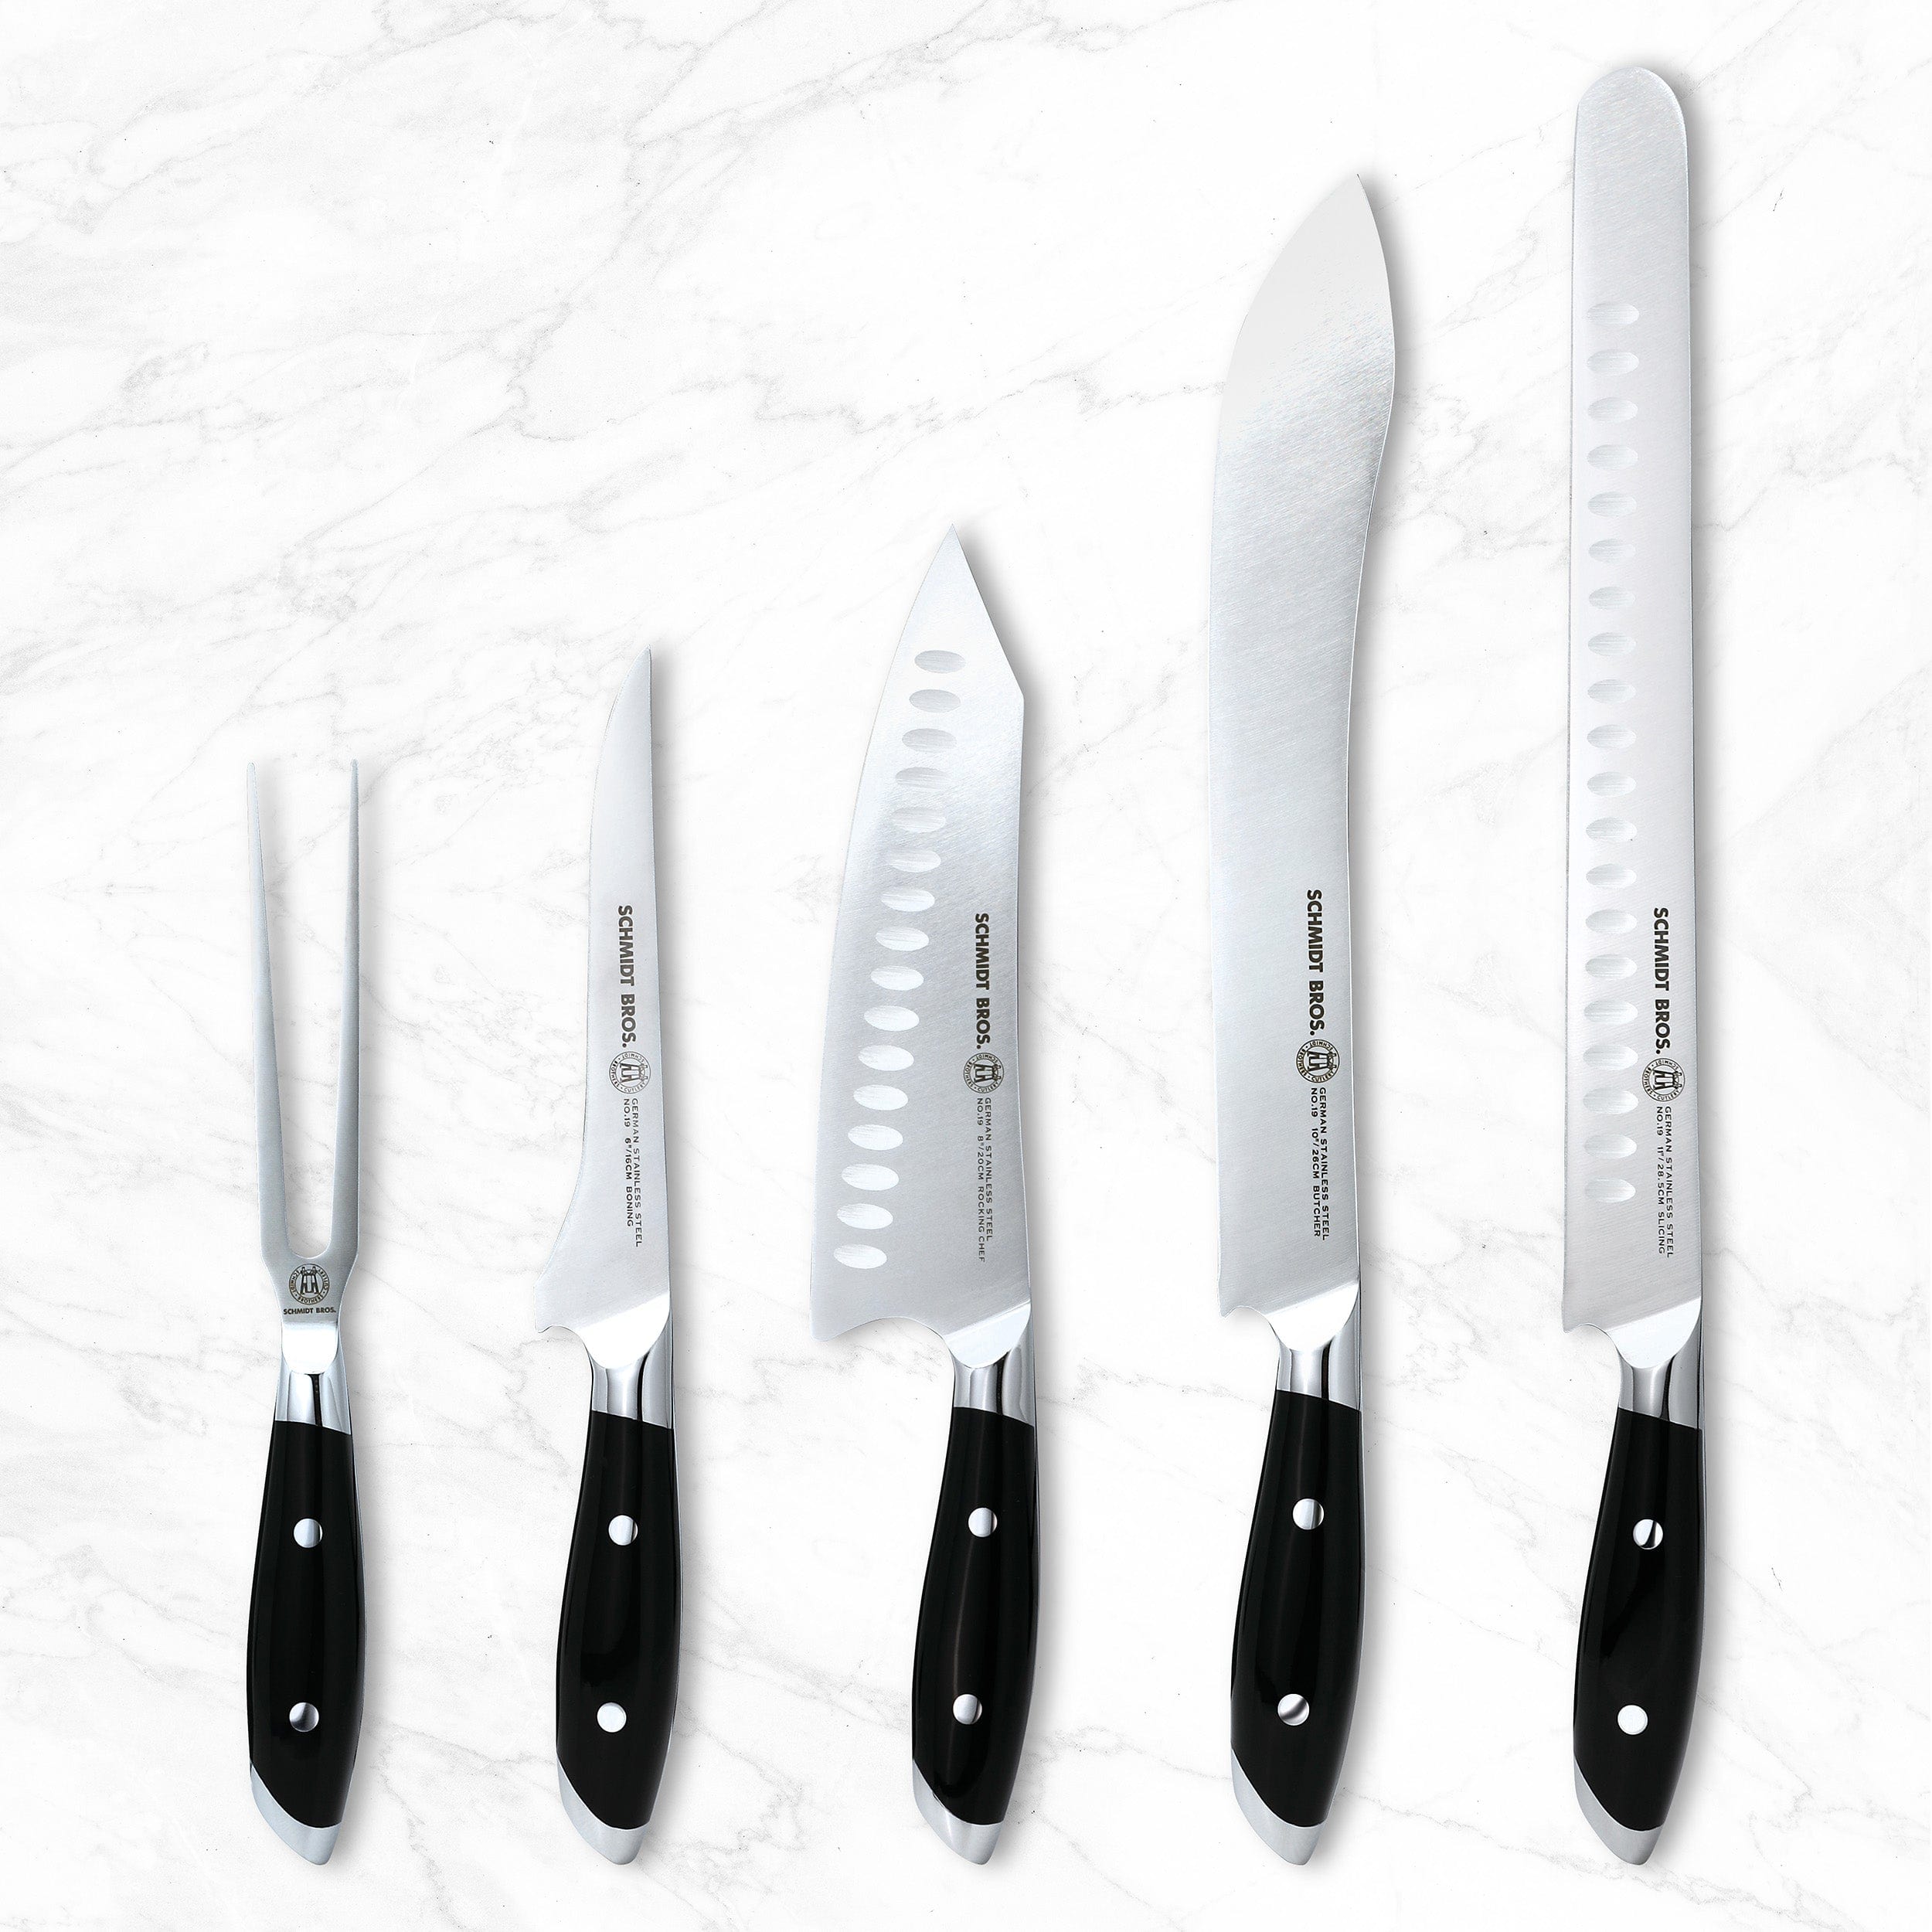 Zebra Wood, 6-Piece BBQ Knife Set, Fully Forged Stainless Steel Grilling  Utensils Including Brisket Knife, Butcher Knife, Chef's Knife, Boning  Knife